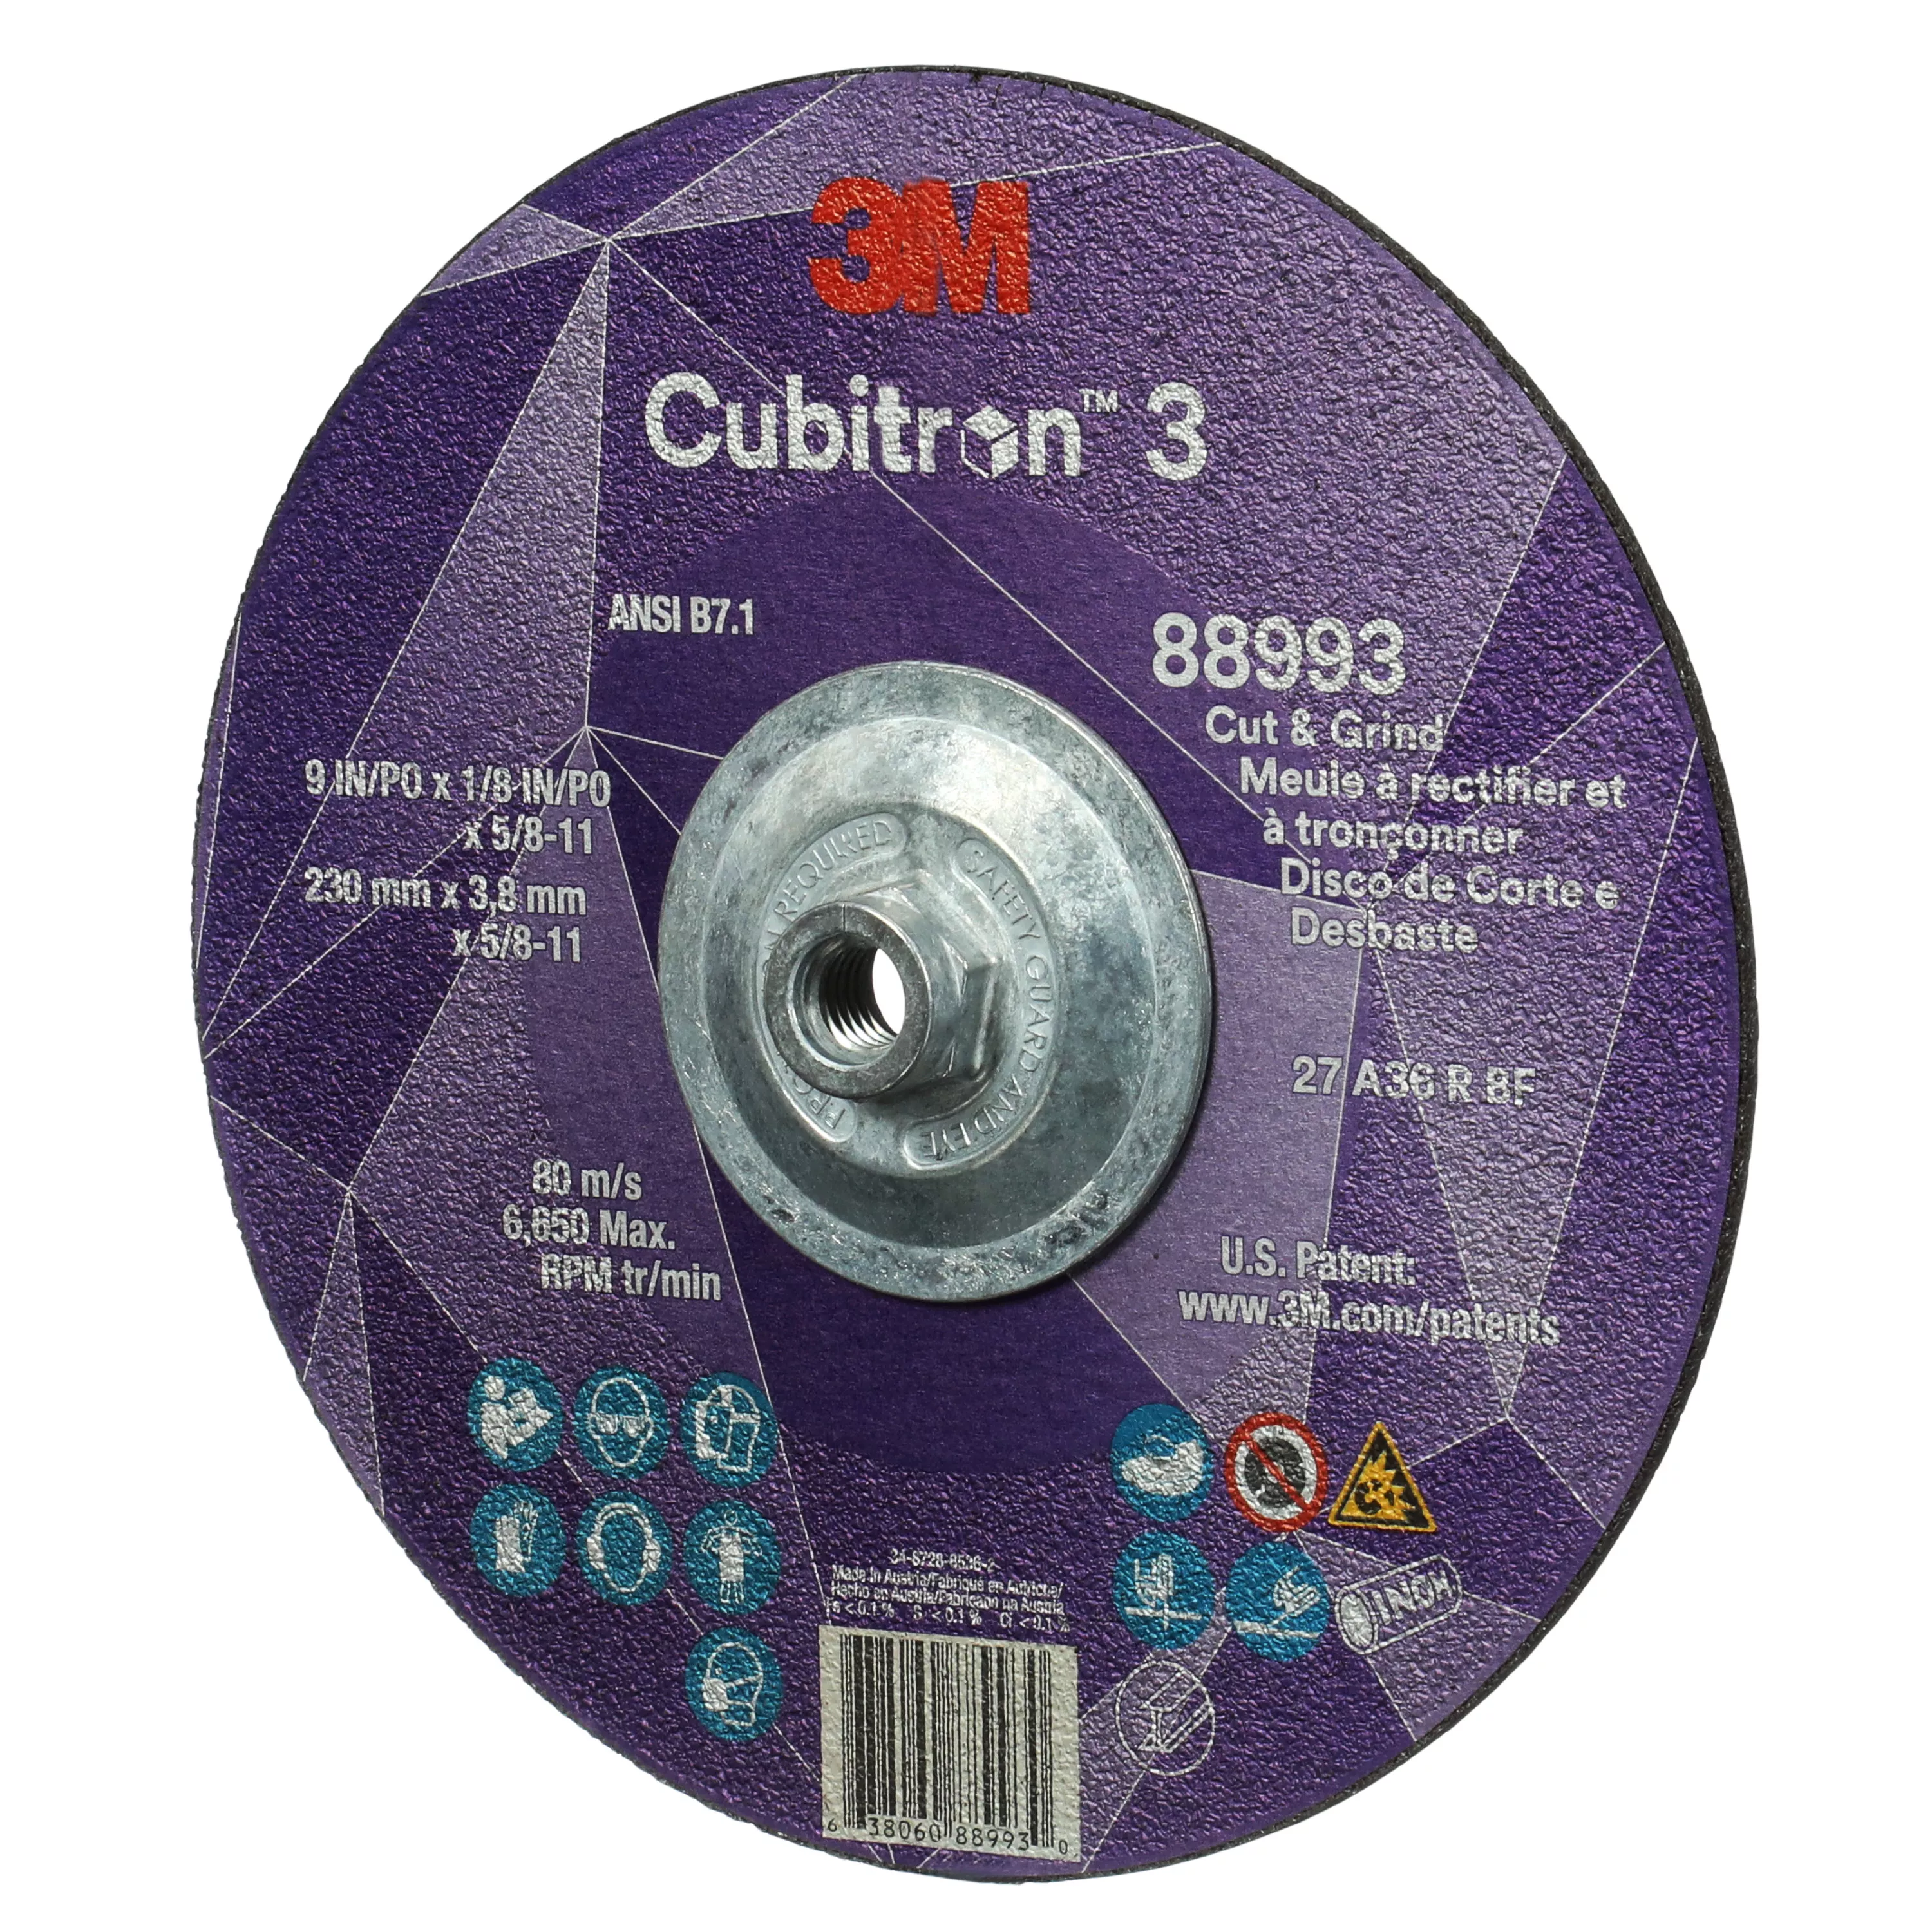 SKU 7100313197 | 3M™ Cubitron™ 3 Cut and Grind Wheel